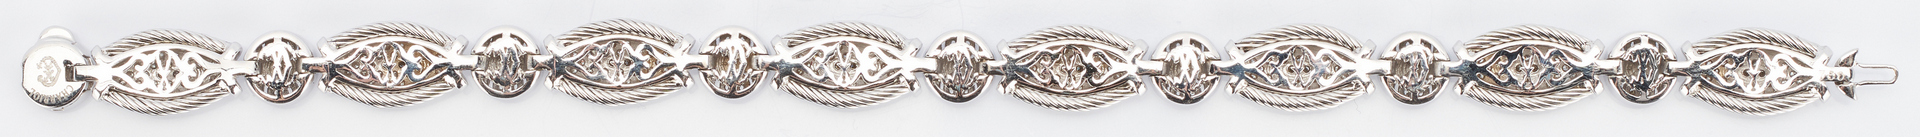 Lot 266: Charriol 18K Gold and Diamond Bracelet